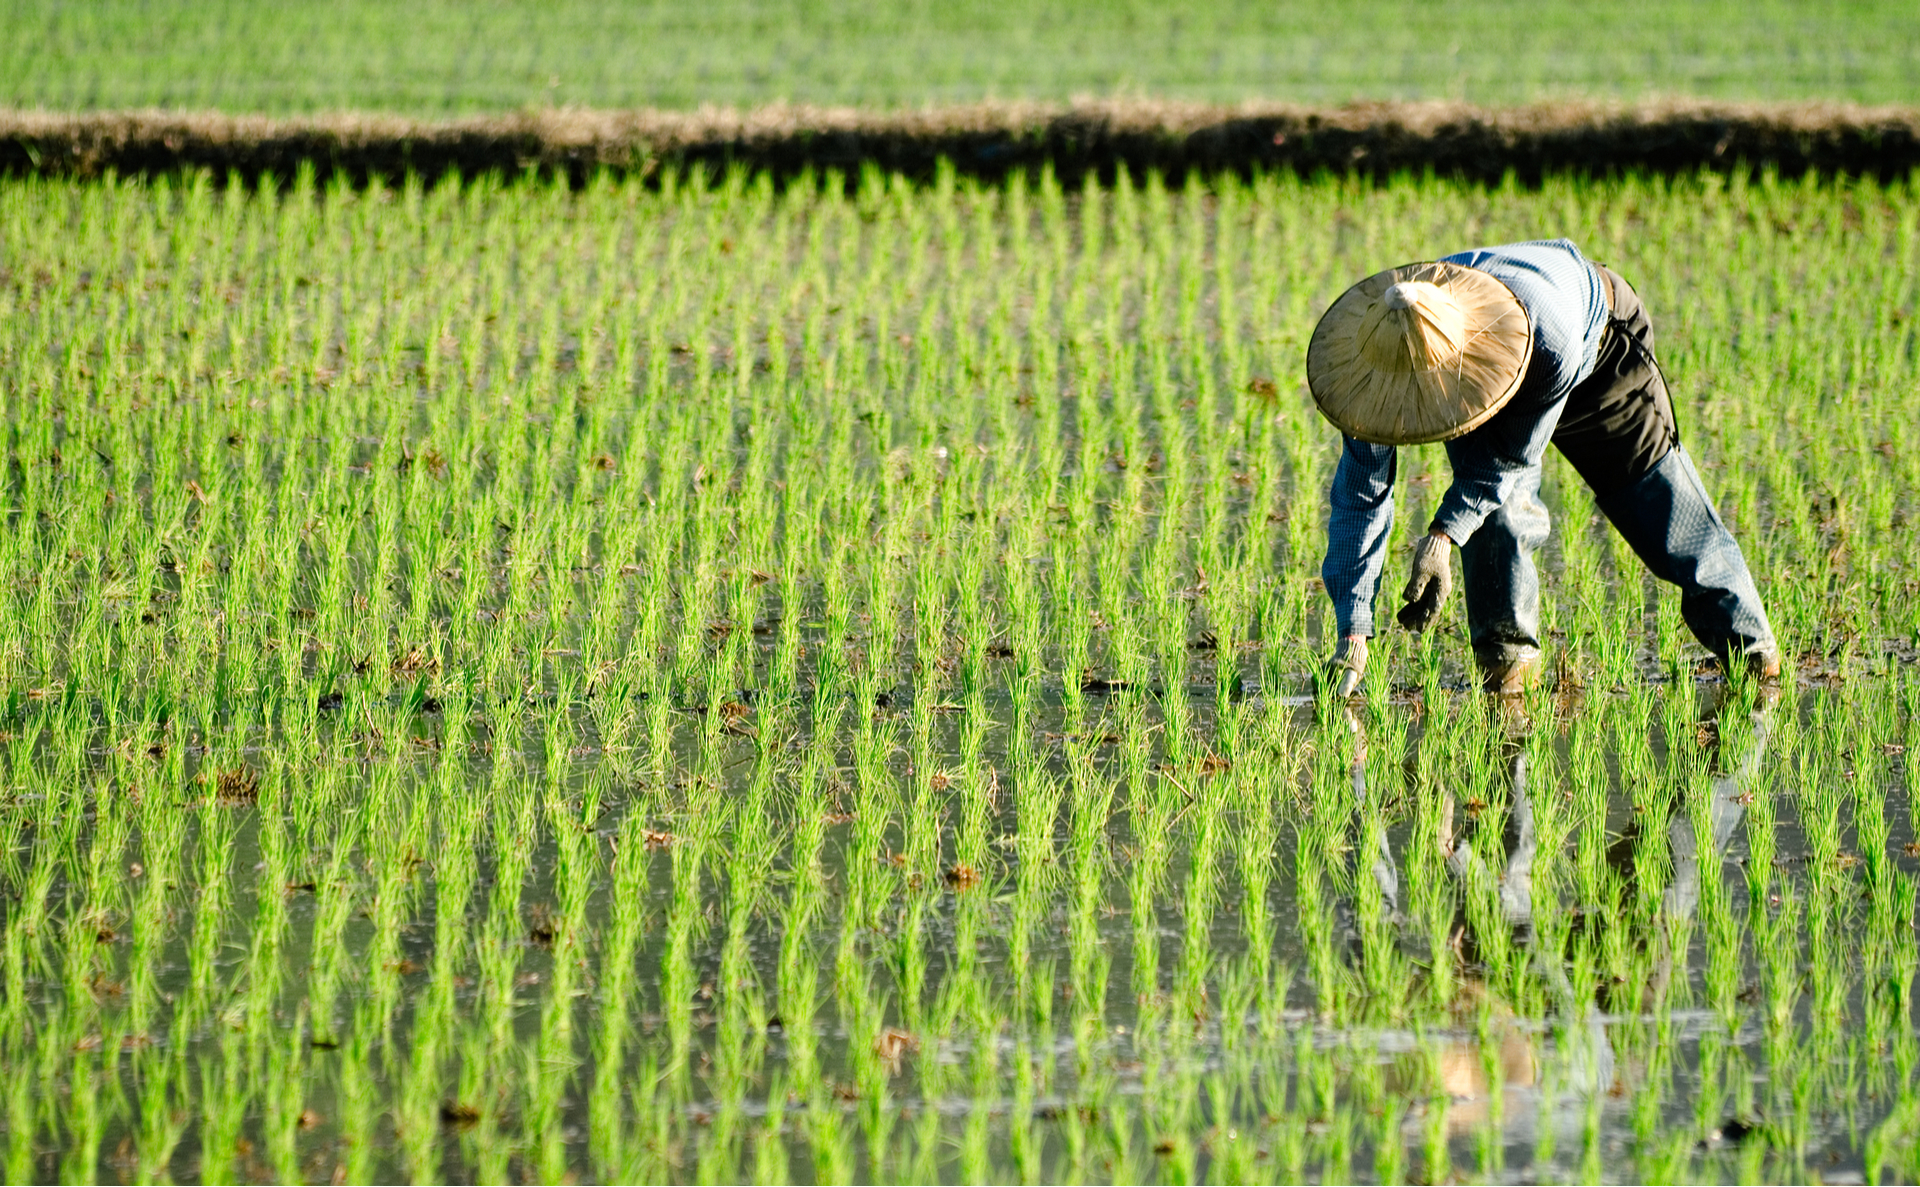 Decorative image: farmer in a field of green crops